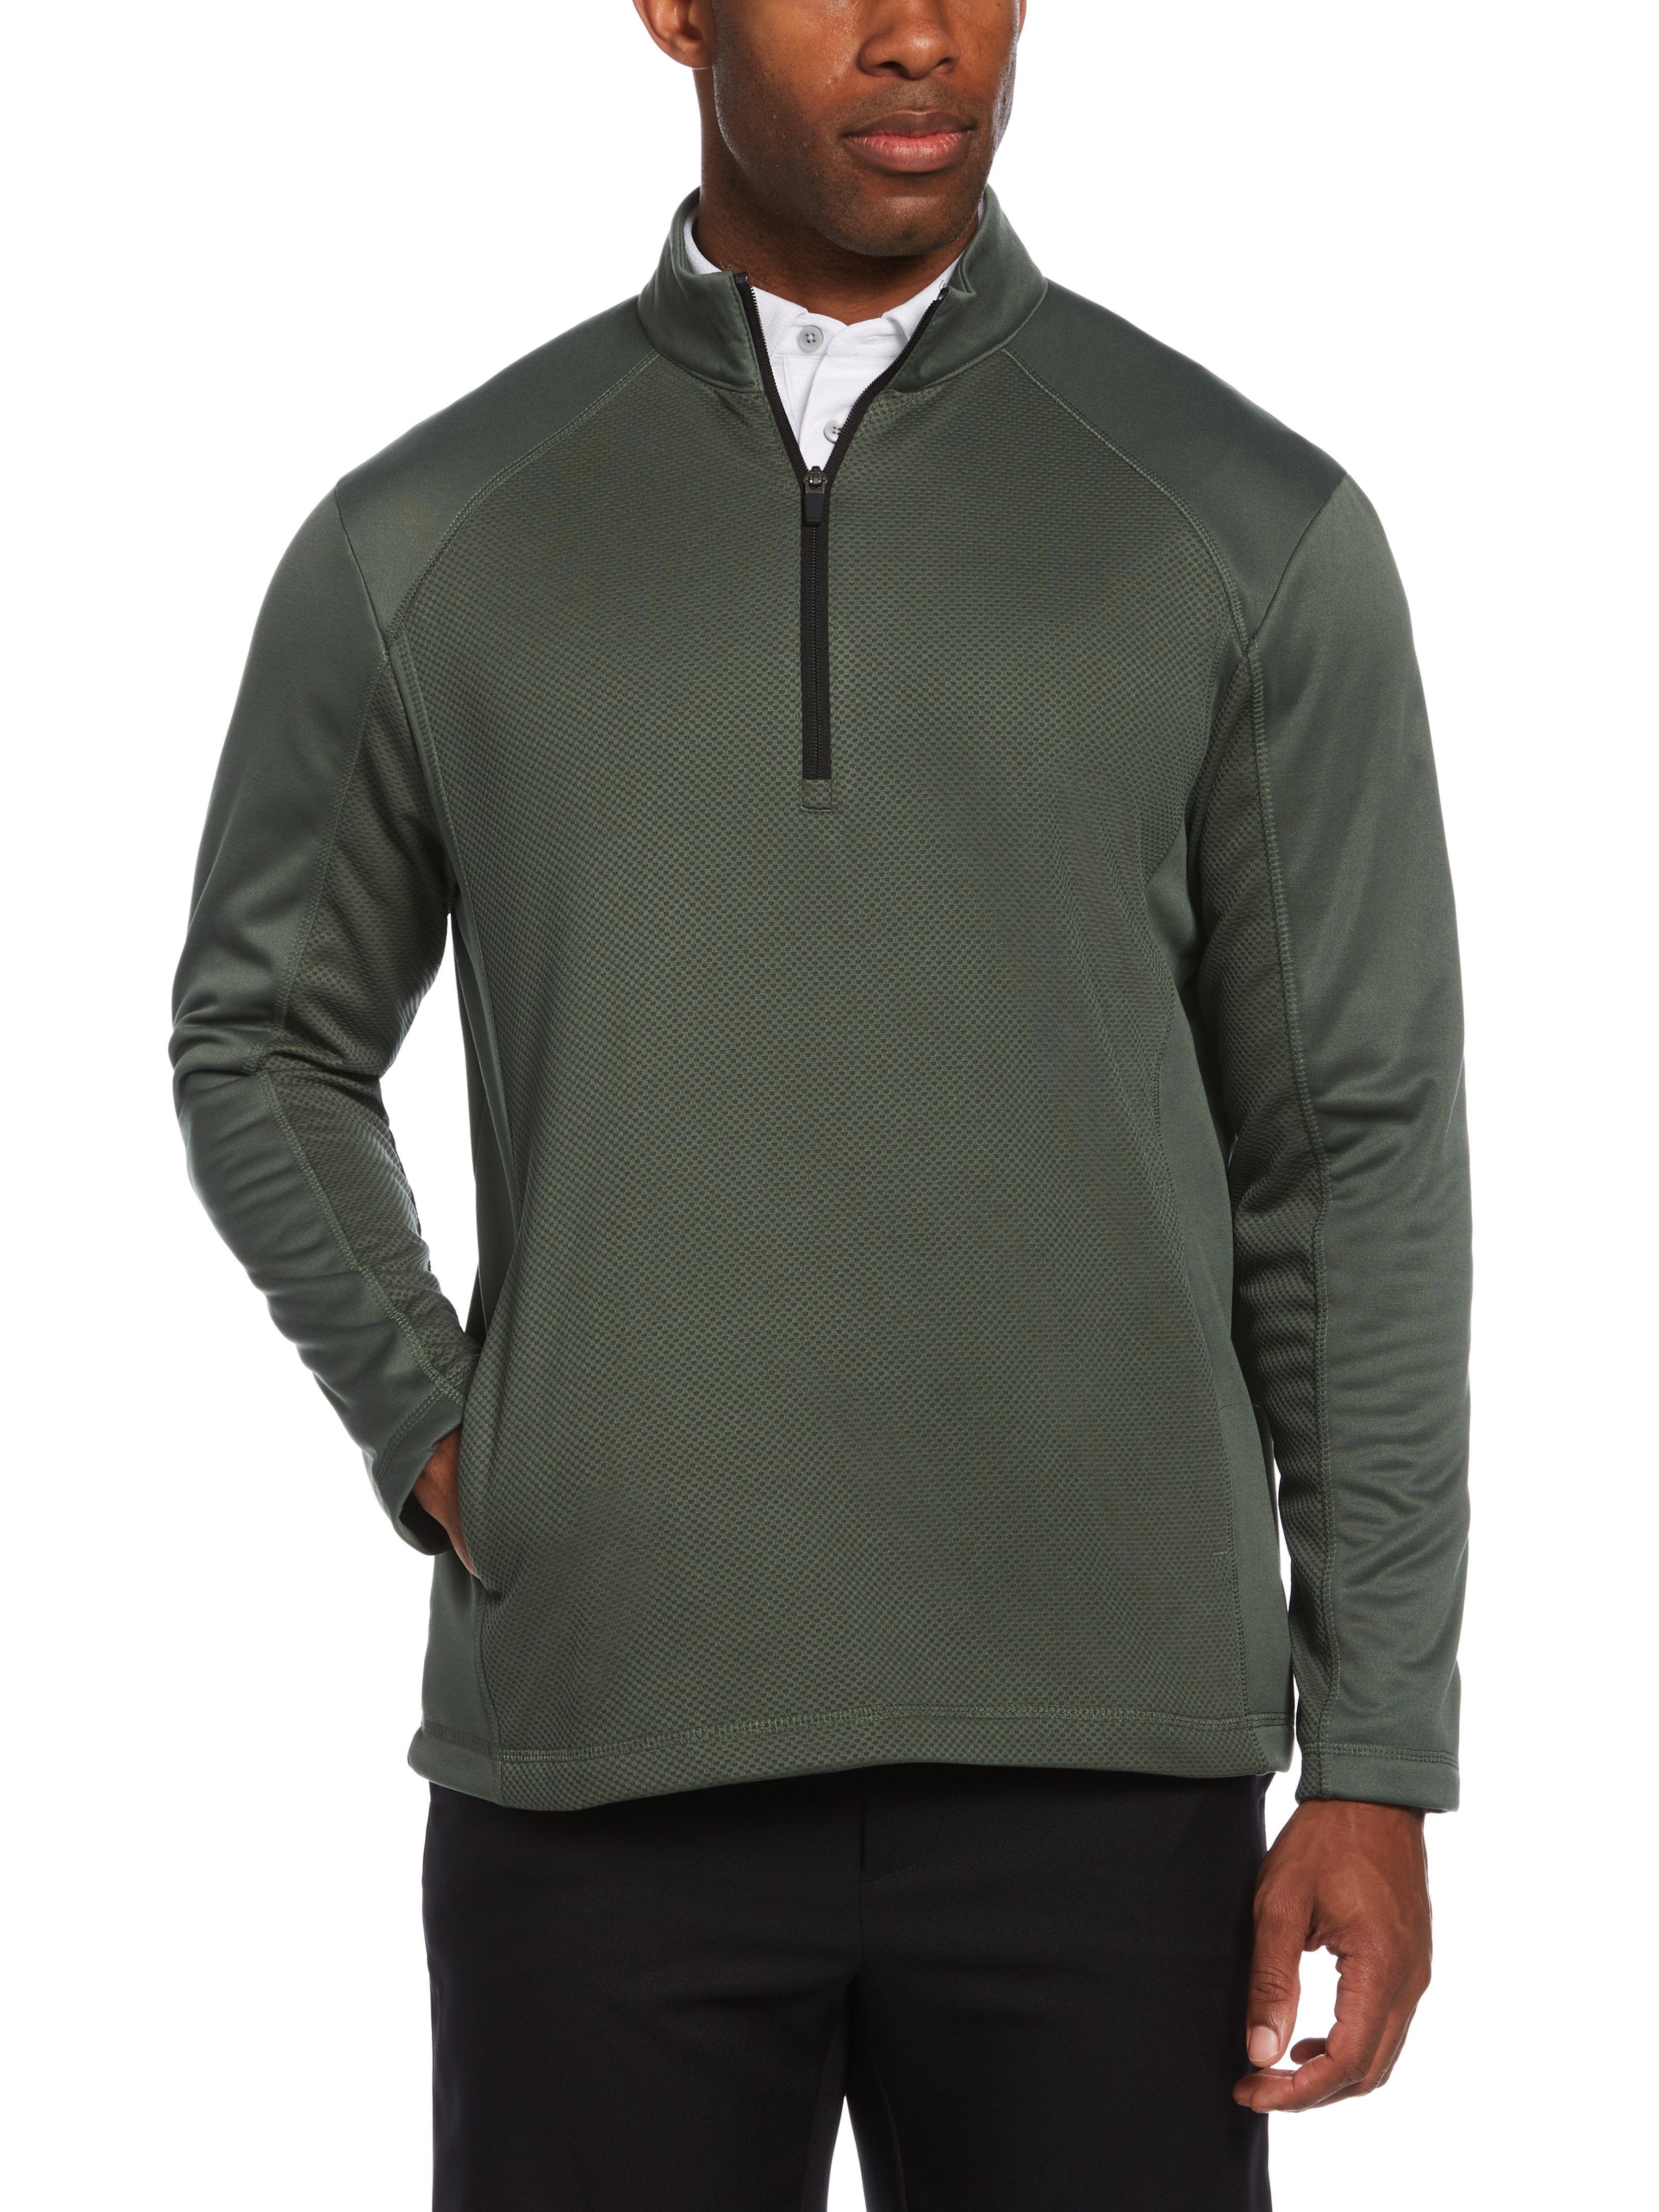 PGA TOUR Apparel Mens Mixed Texture Fleece 1/4 Zip Golf Jacket Top, Size XL, Duck Green, 100% Polyester | Golf Apparel Shop